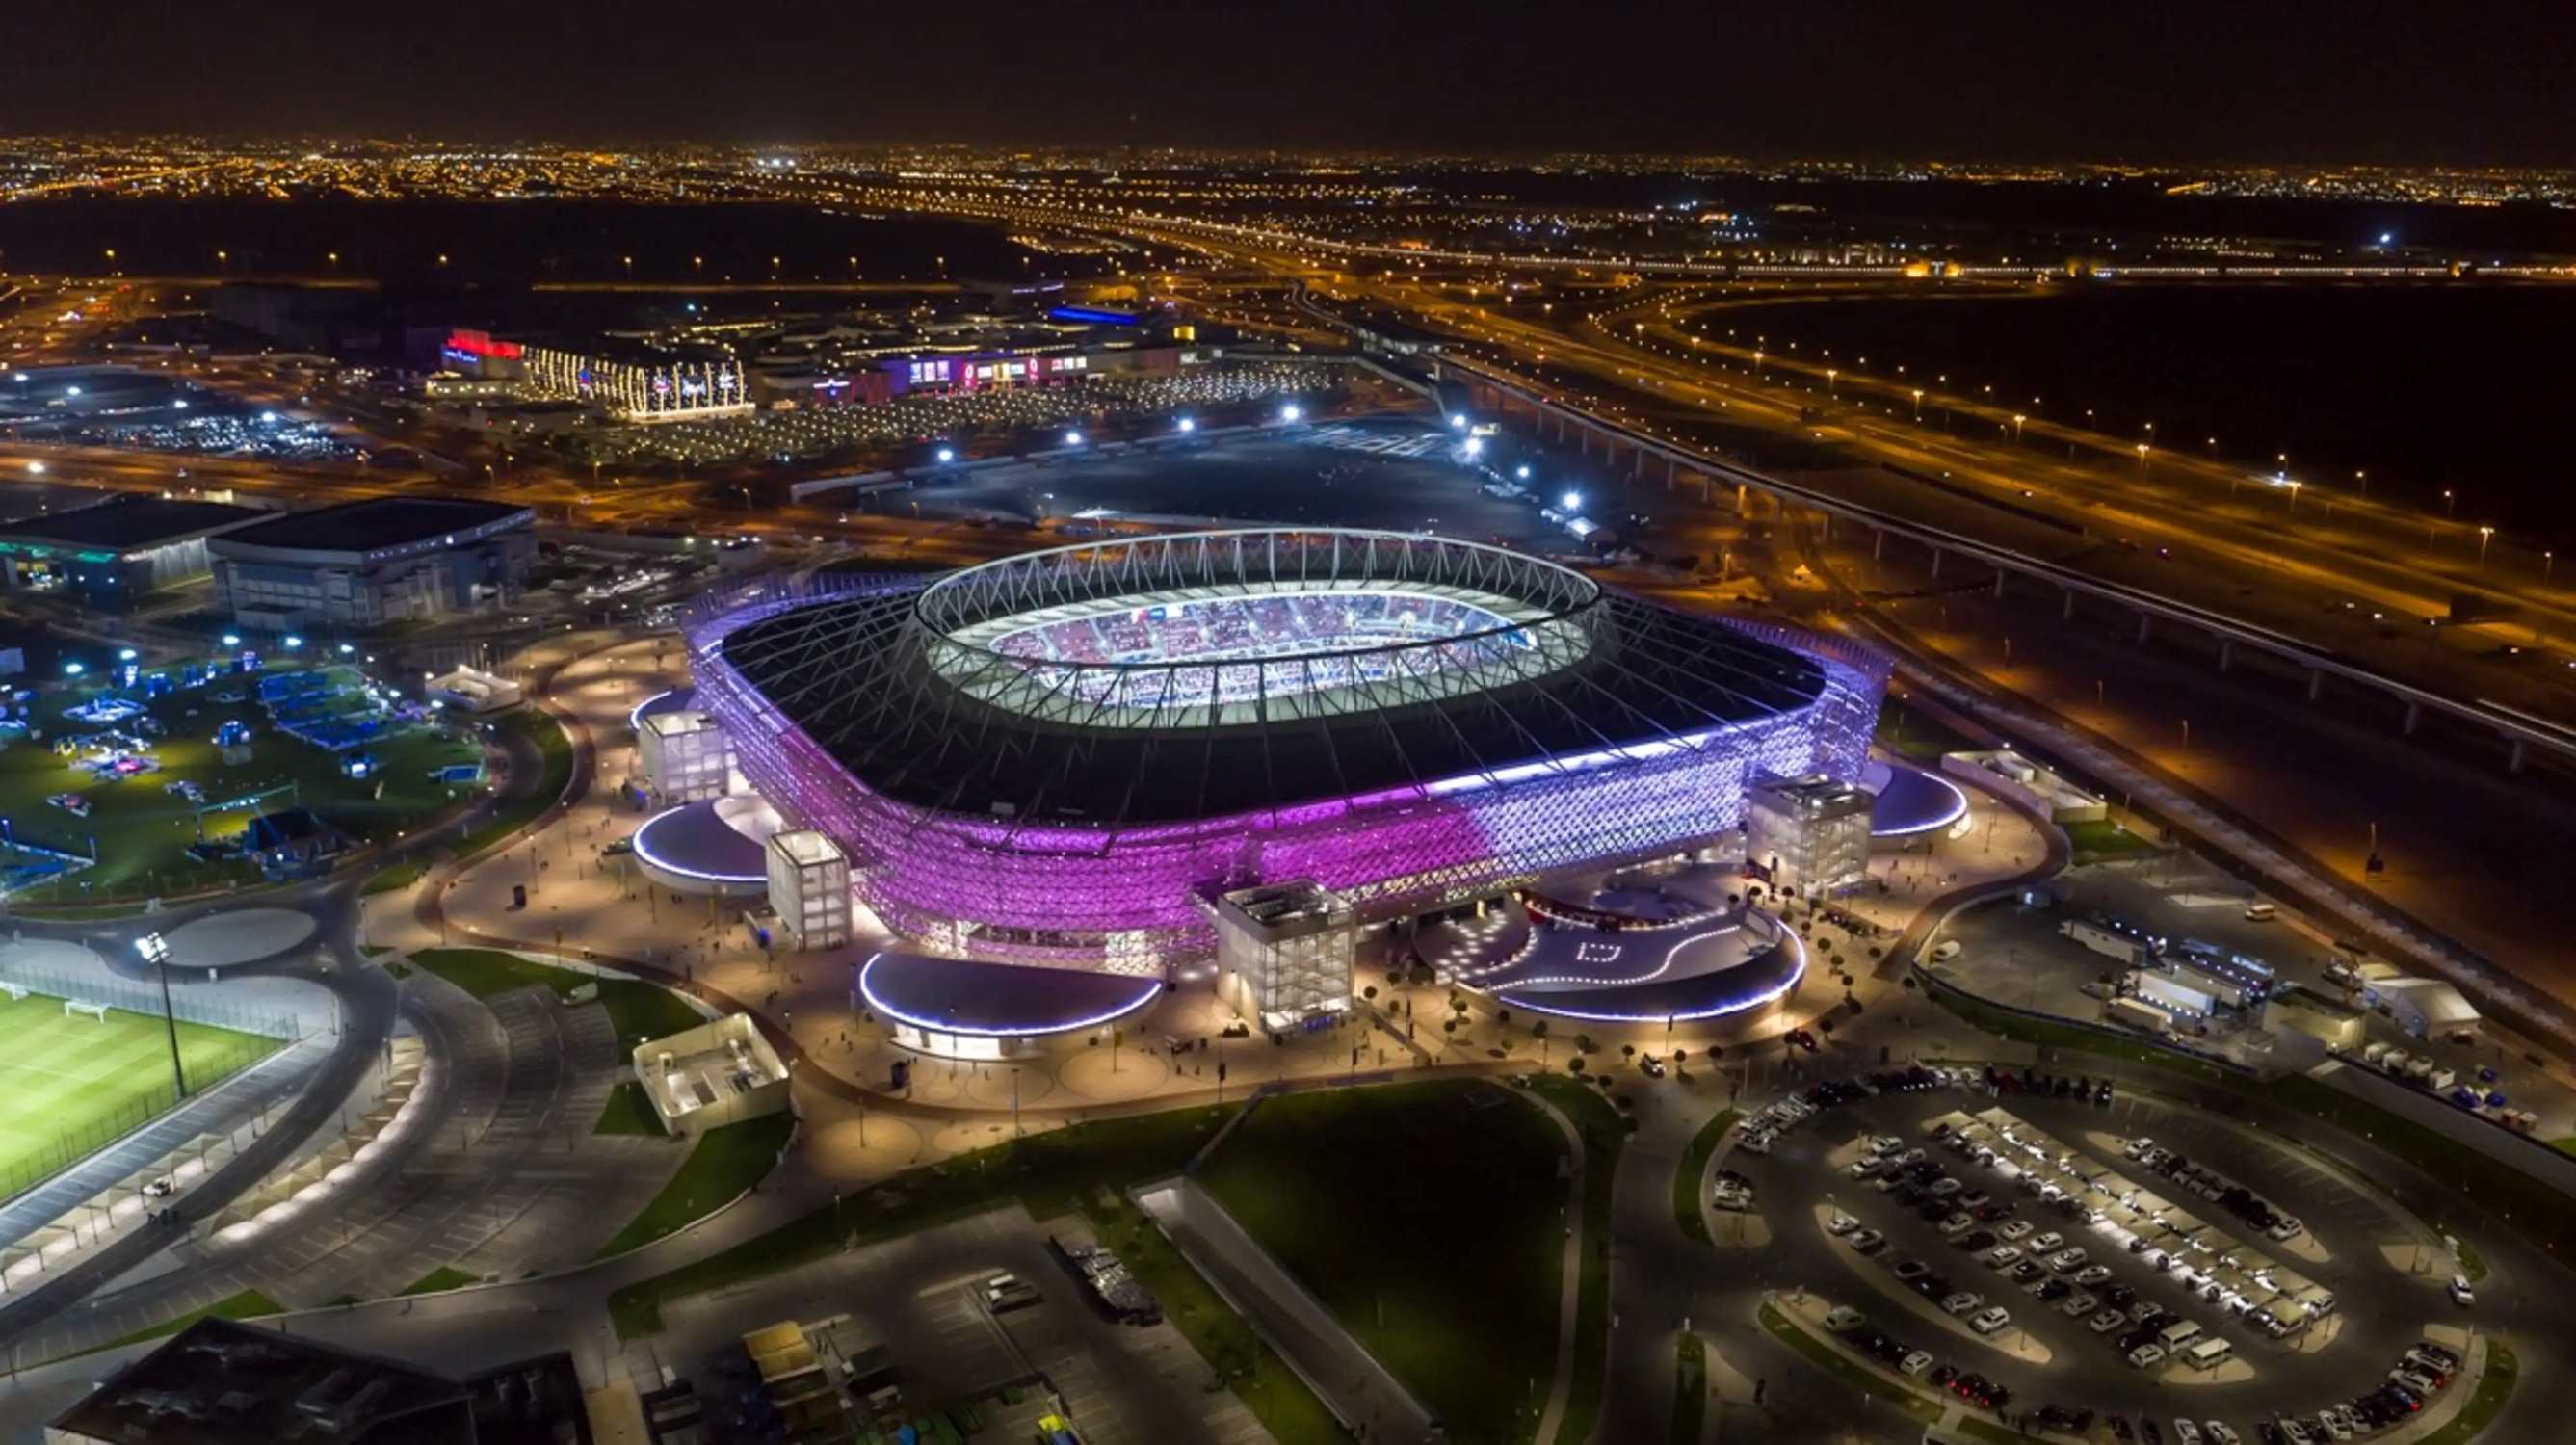 13 Intriguing Facts About Abdullah Bin Khalifa Stadium - Facts.net